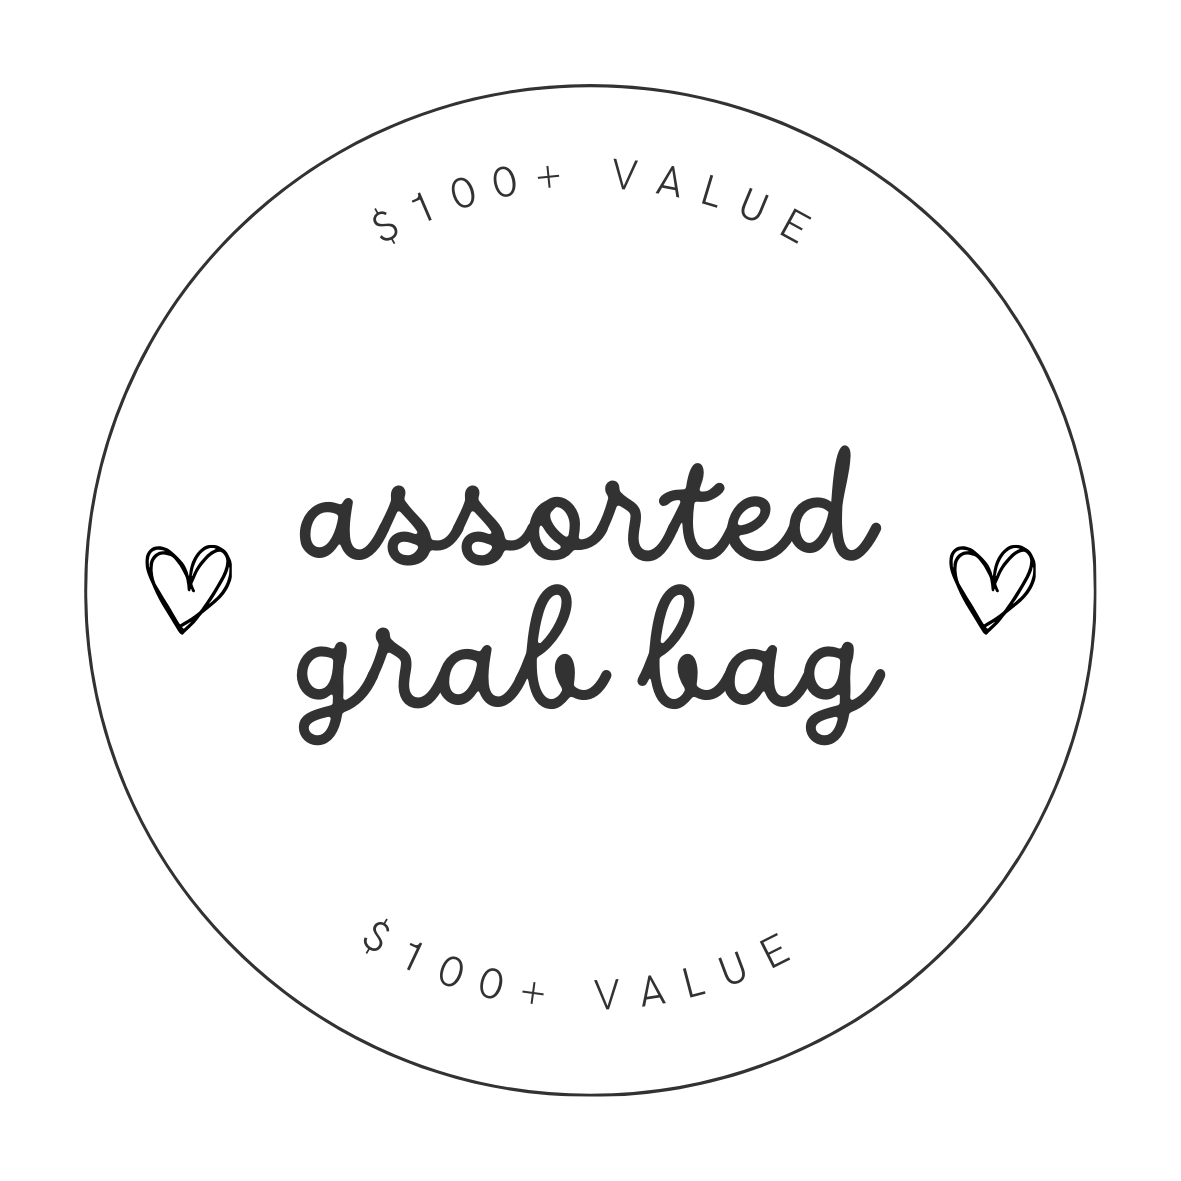 Assorted Grab Bag ($100 Value)